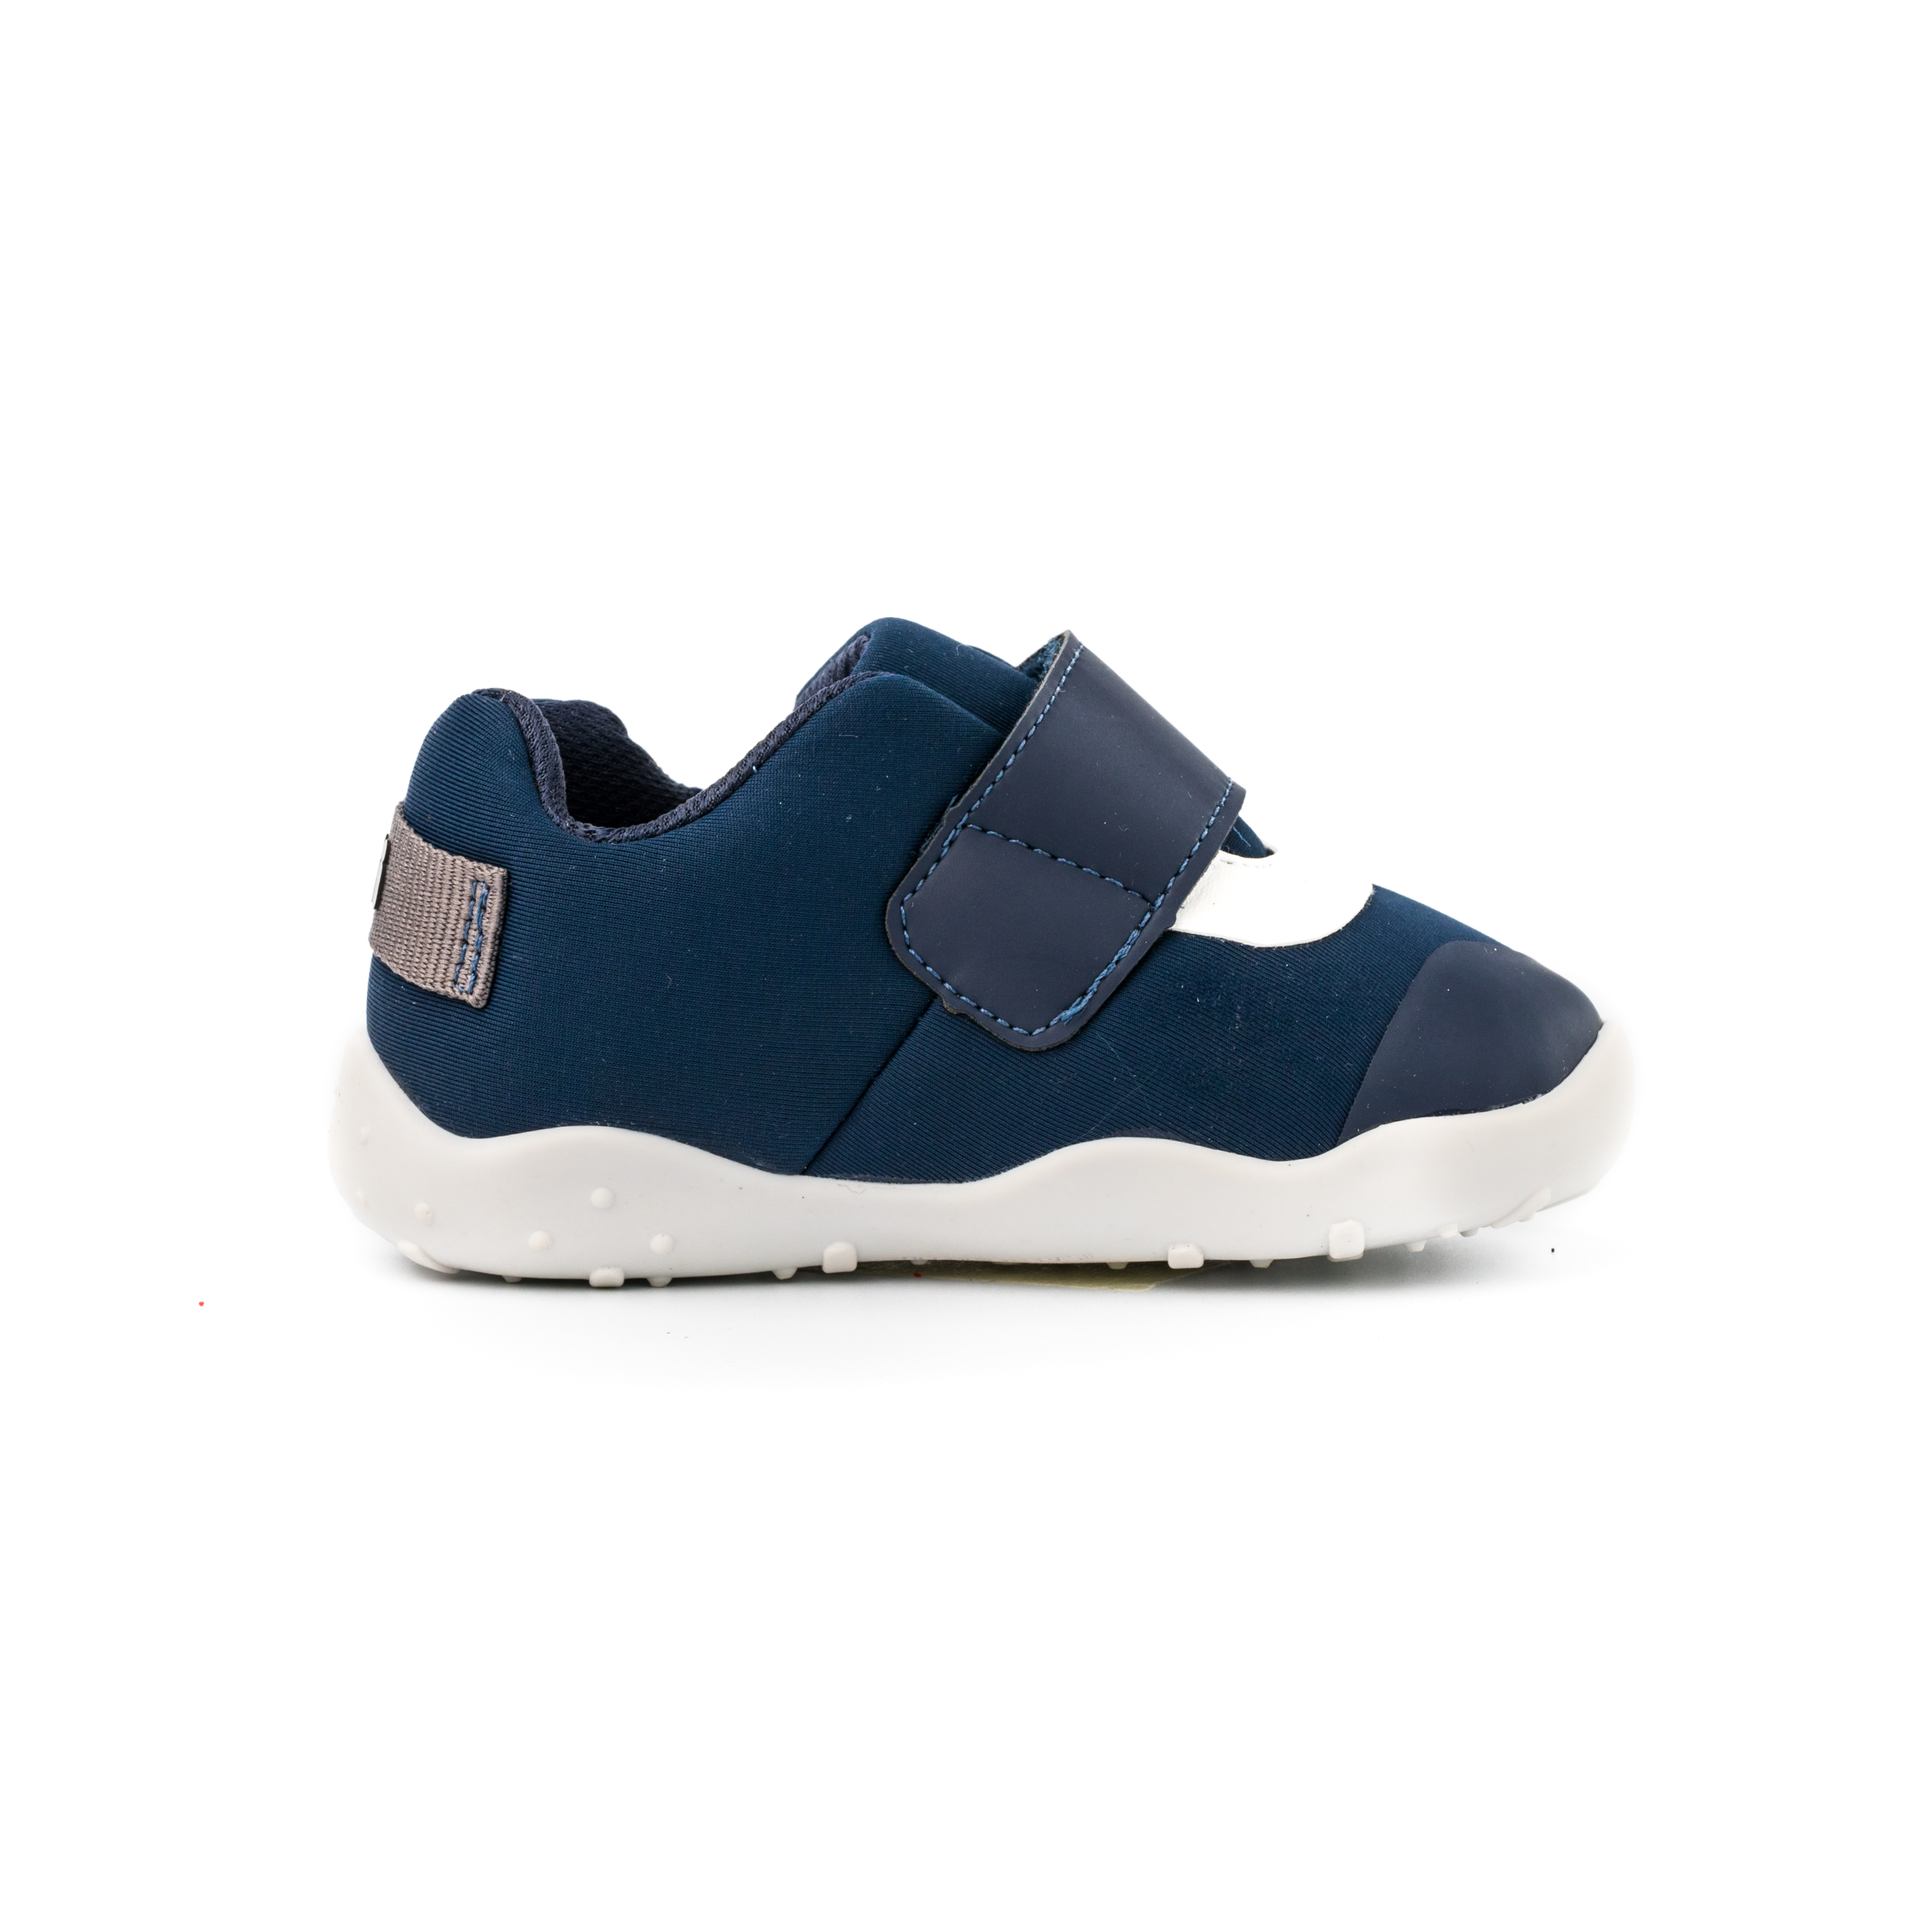 Pantofi Baieti Bibi FisioFlex 4.0 Azul cu Velcro